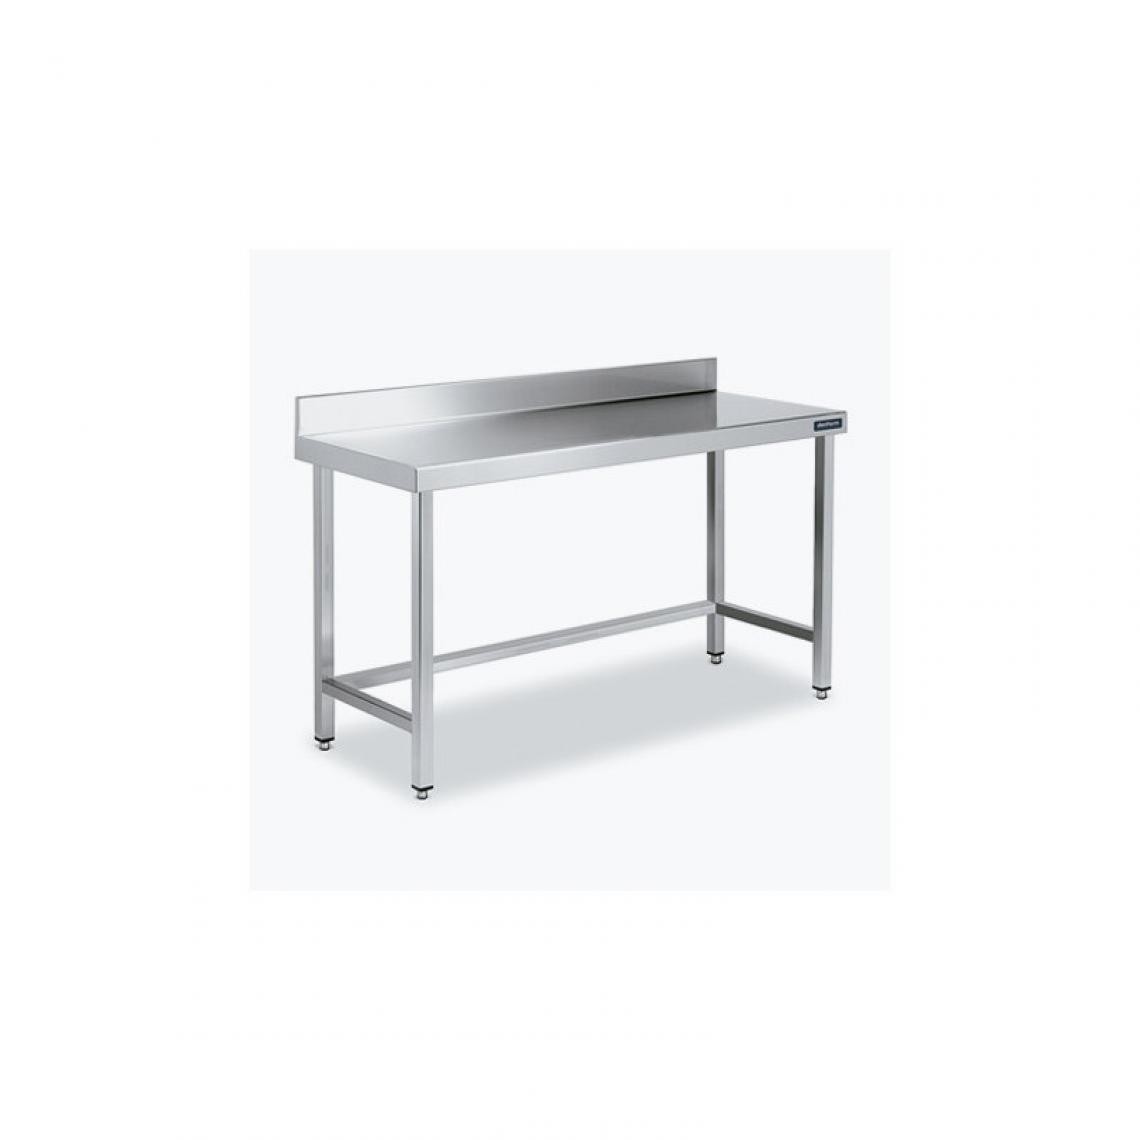 DISTFORM - Table Adossée 600x500 avec Renforts - Distform - Inox 18/10800x500x850mm - Tables à manger